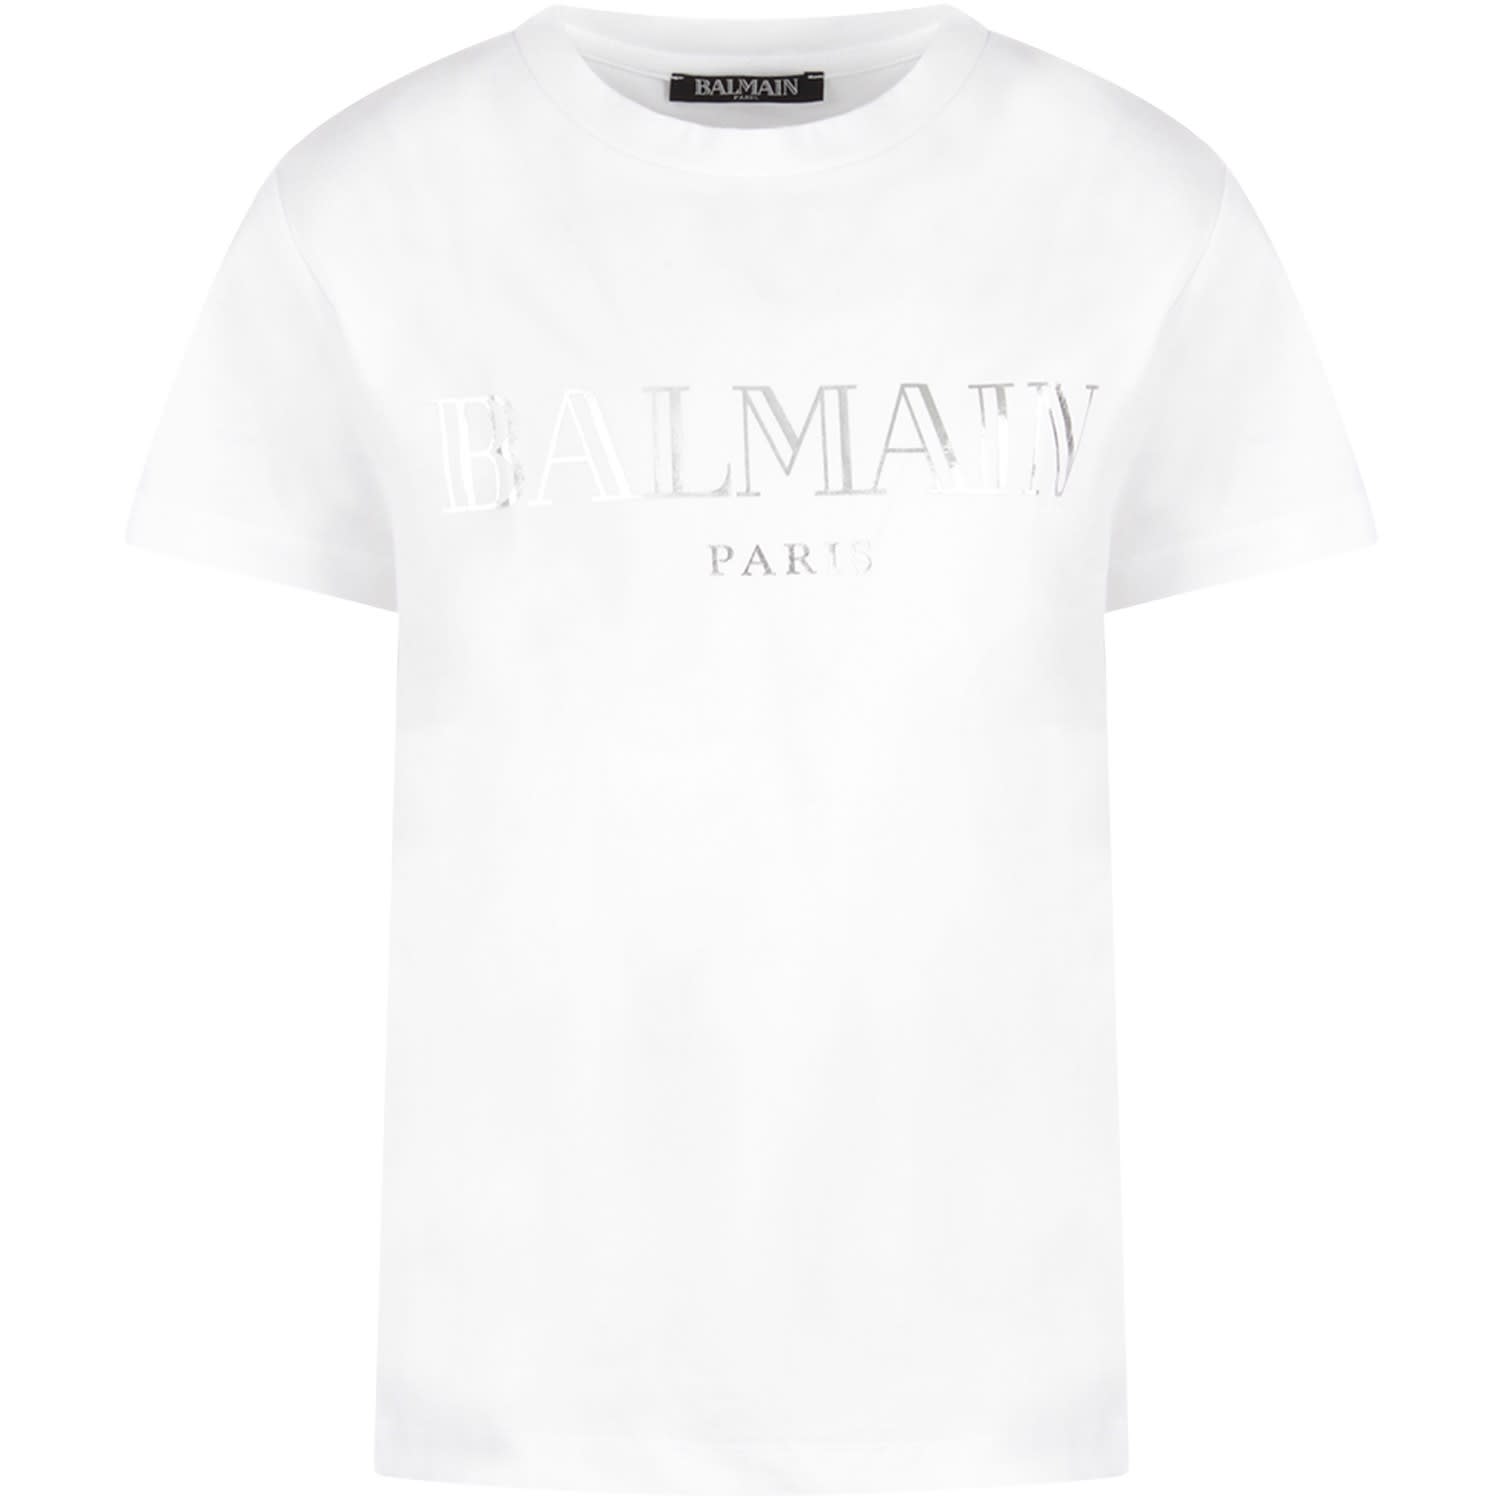 balmain t shirt price